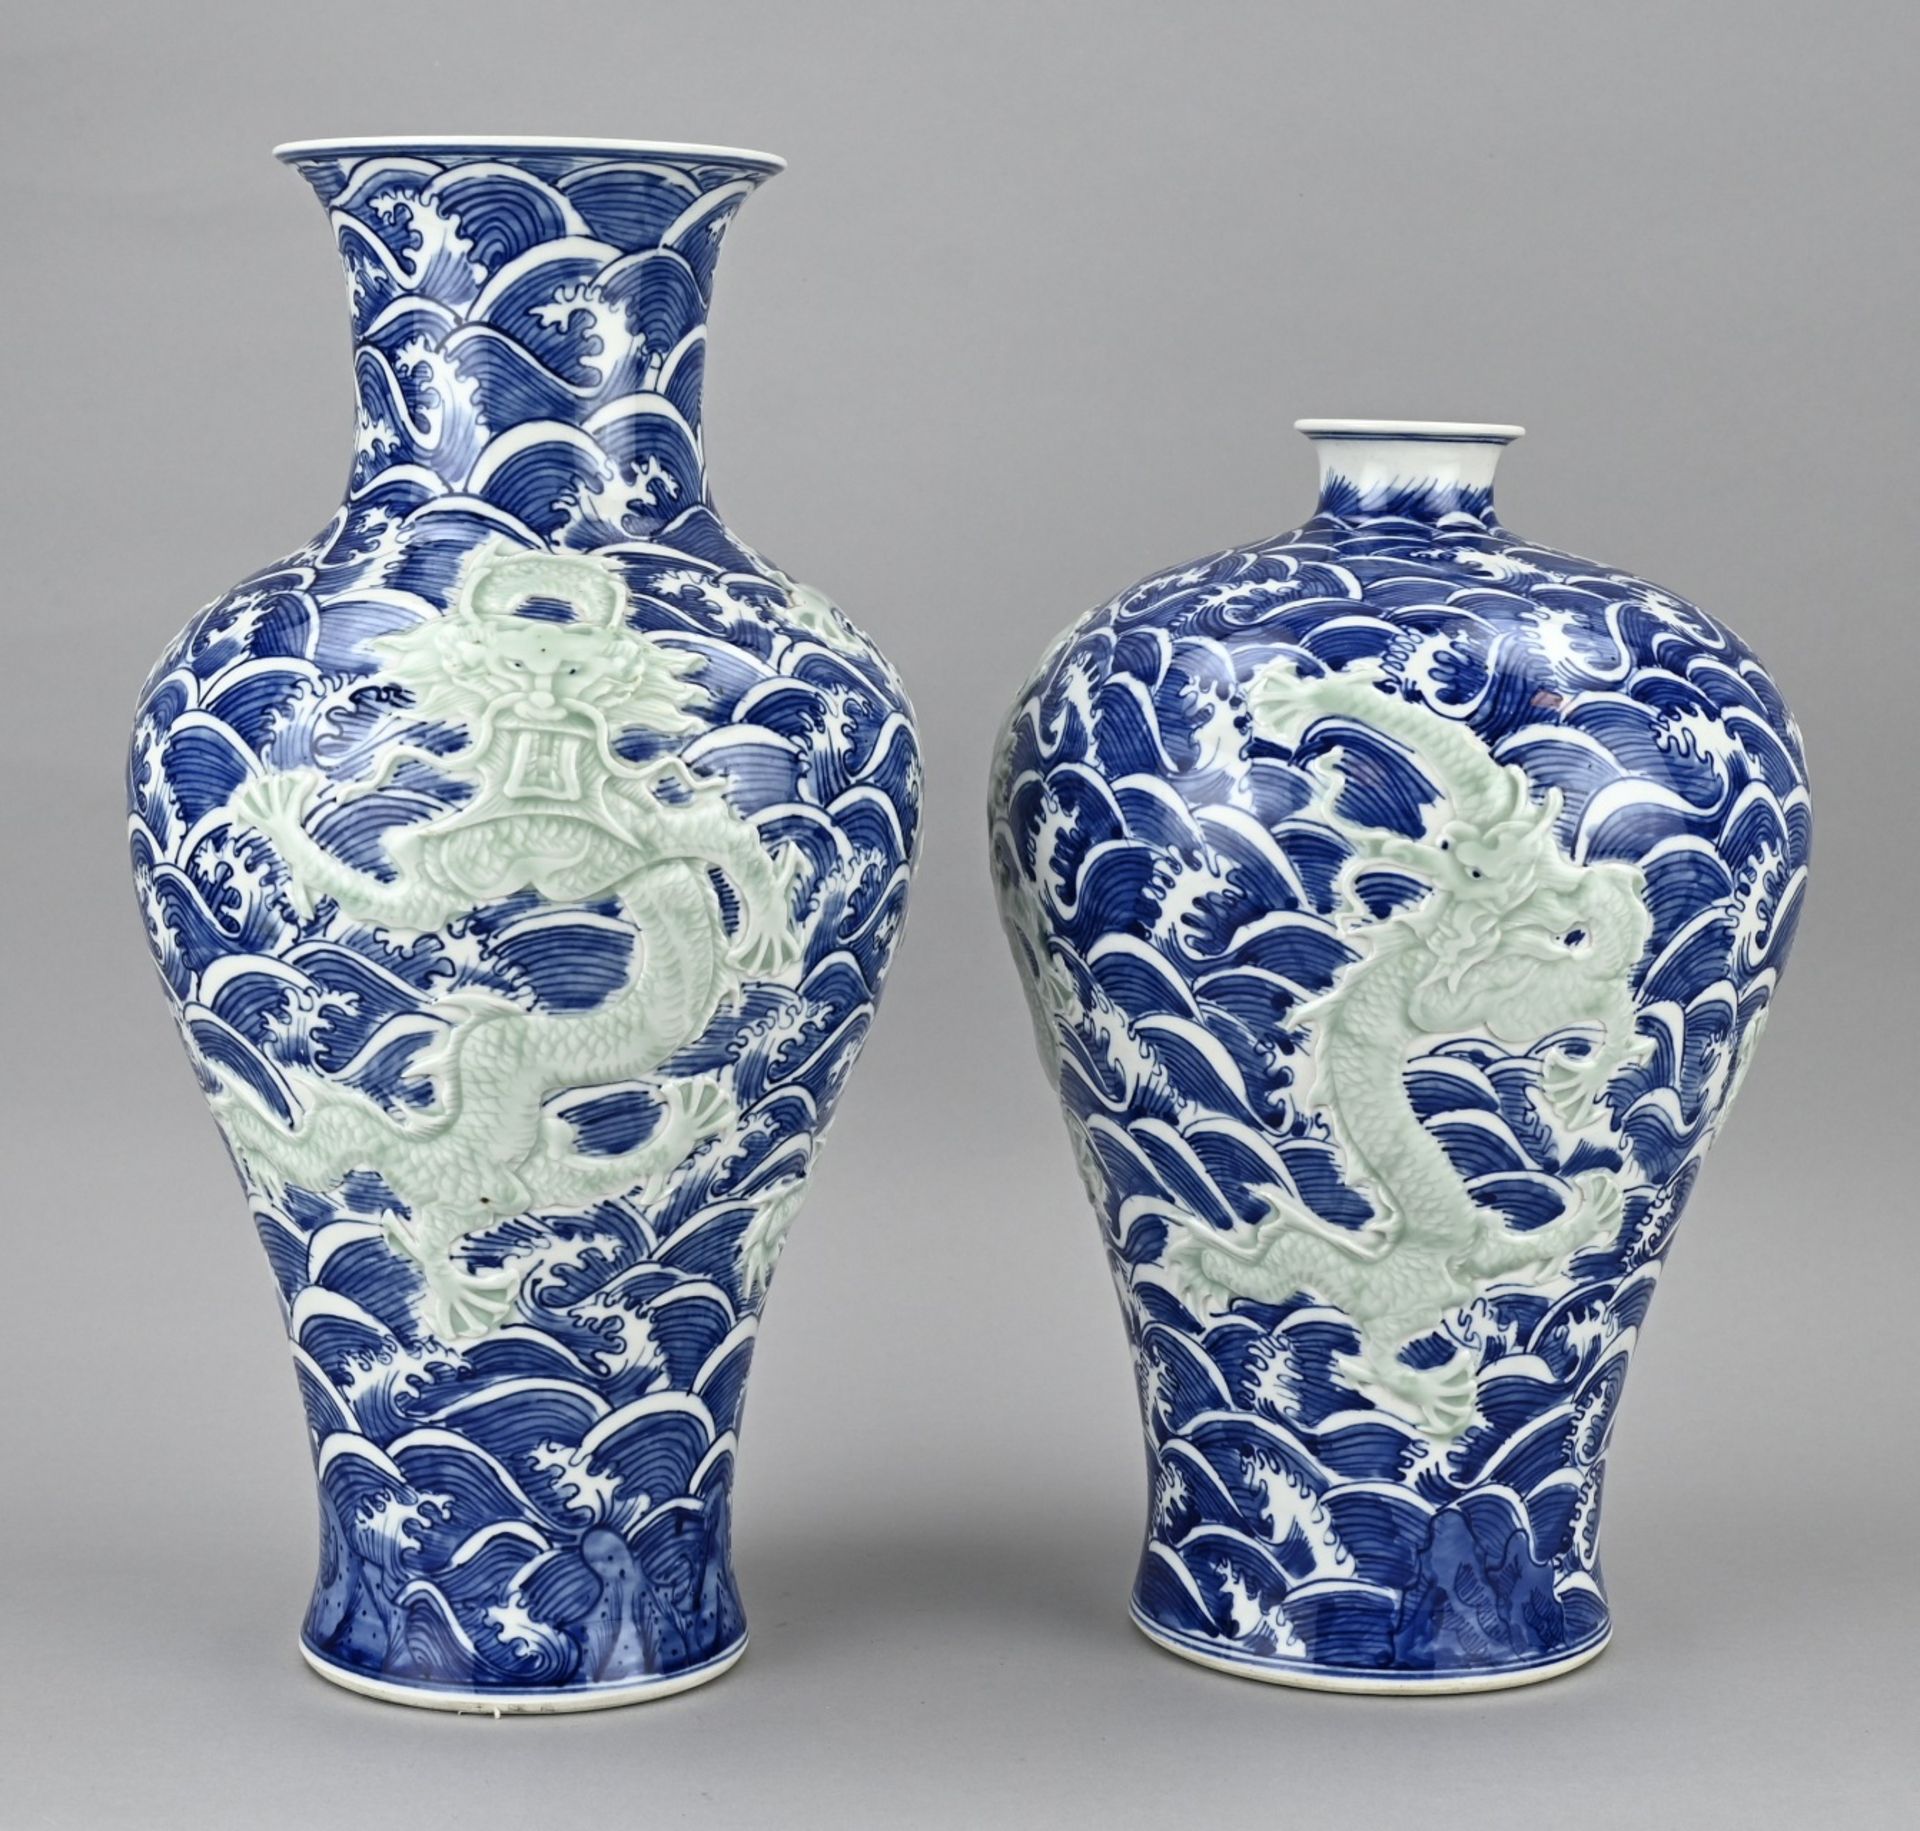 2x Chinese vase, H 34 - 39 cm.